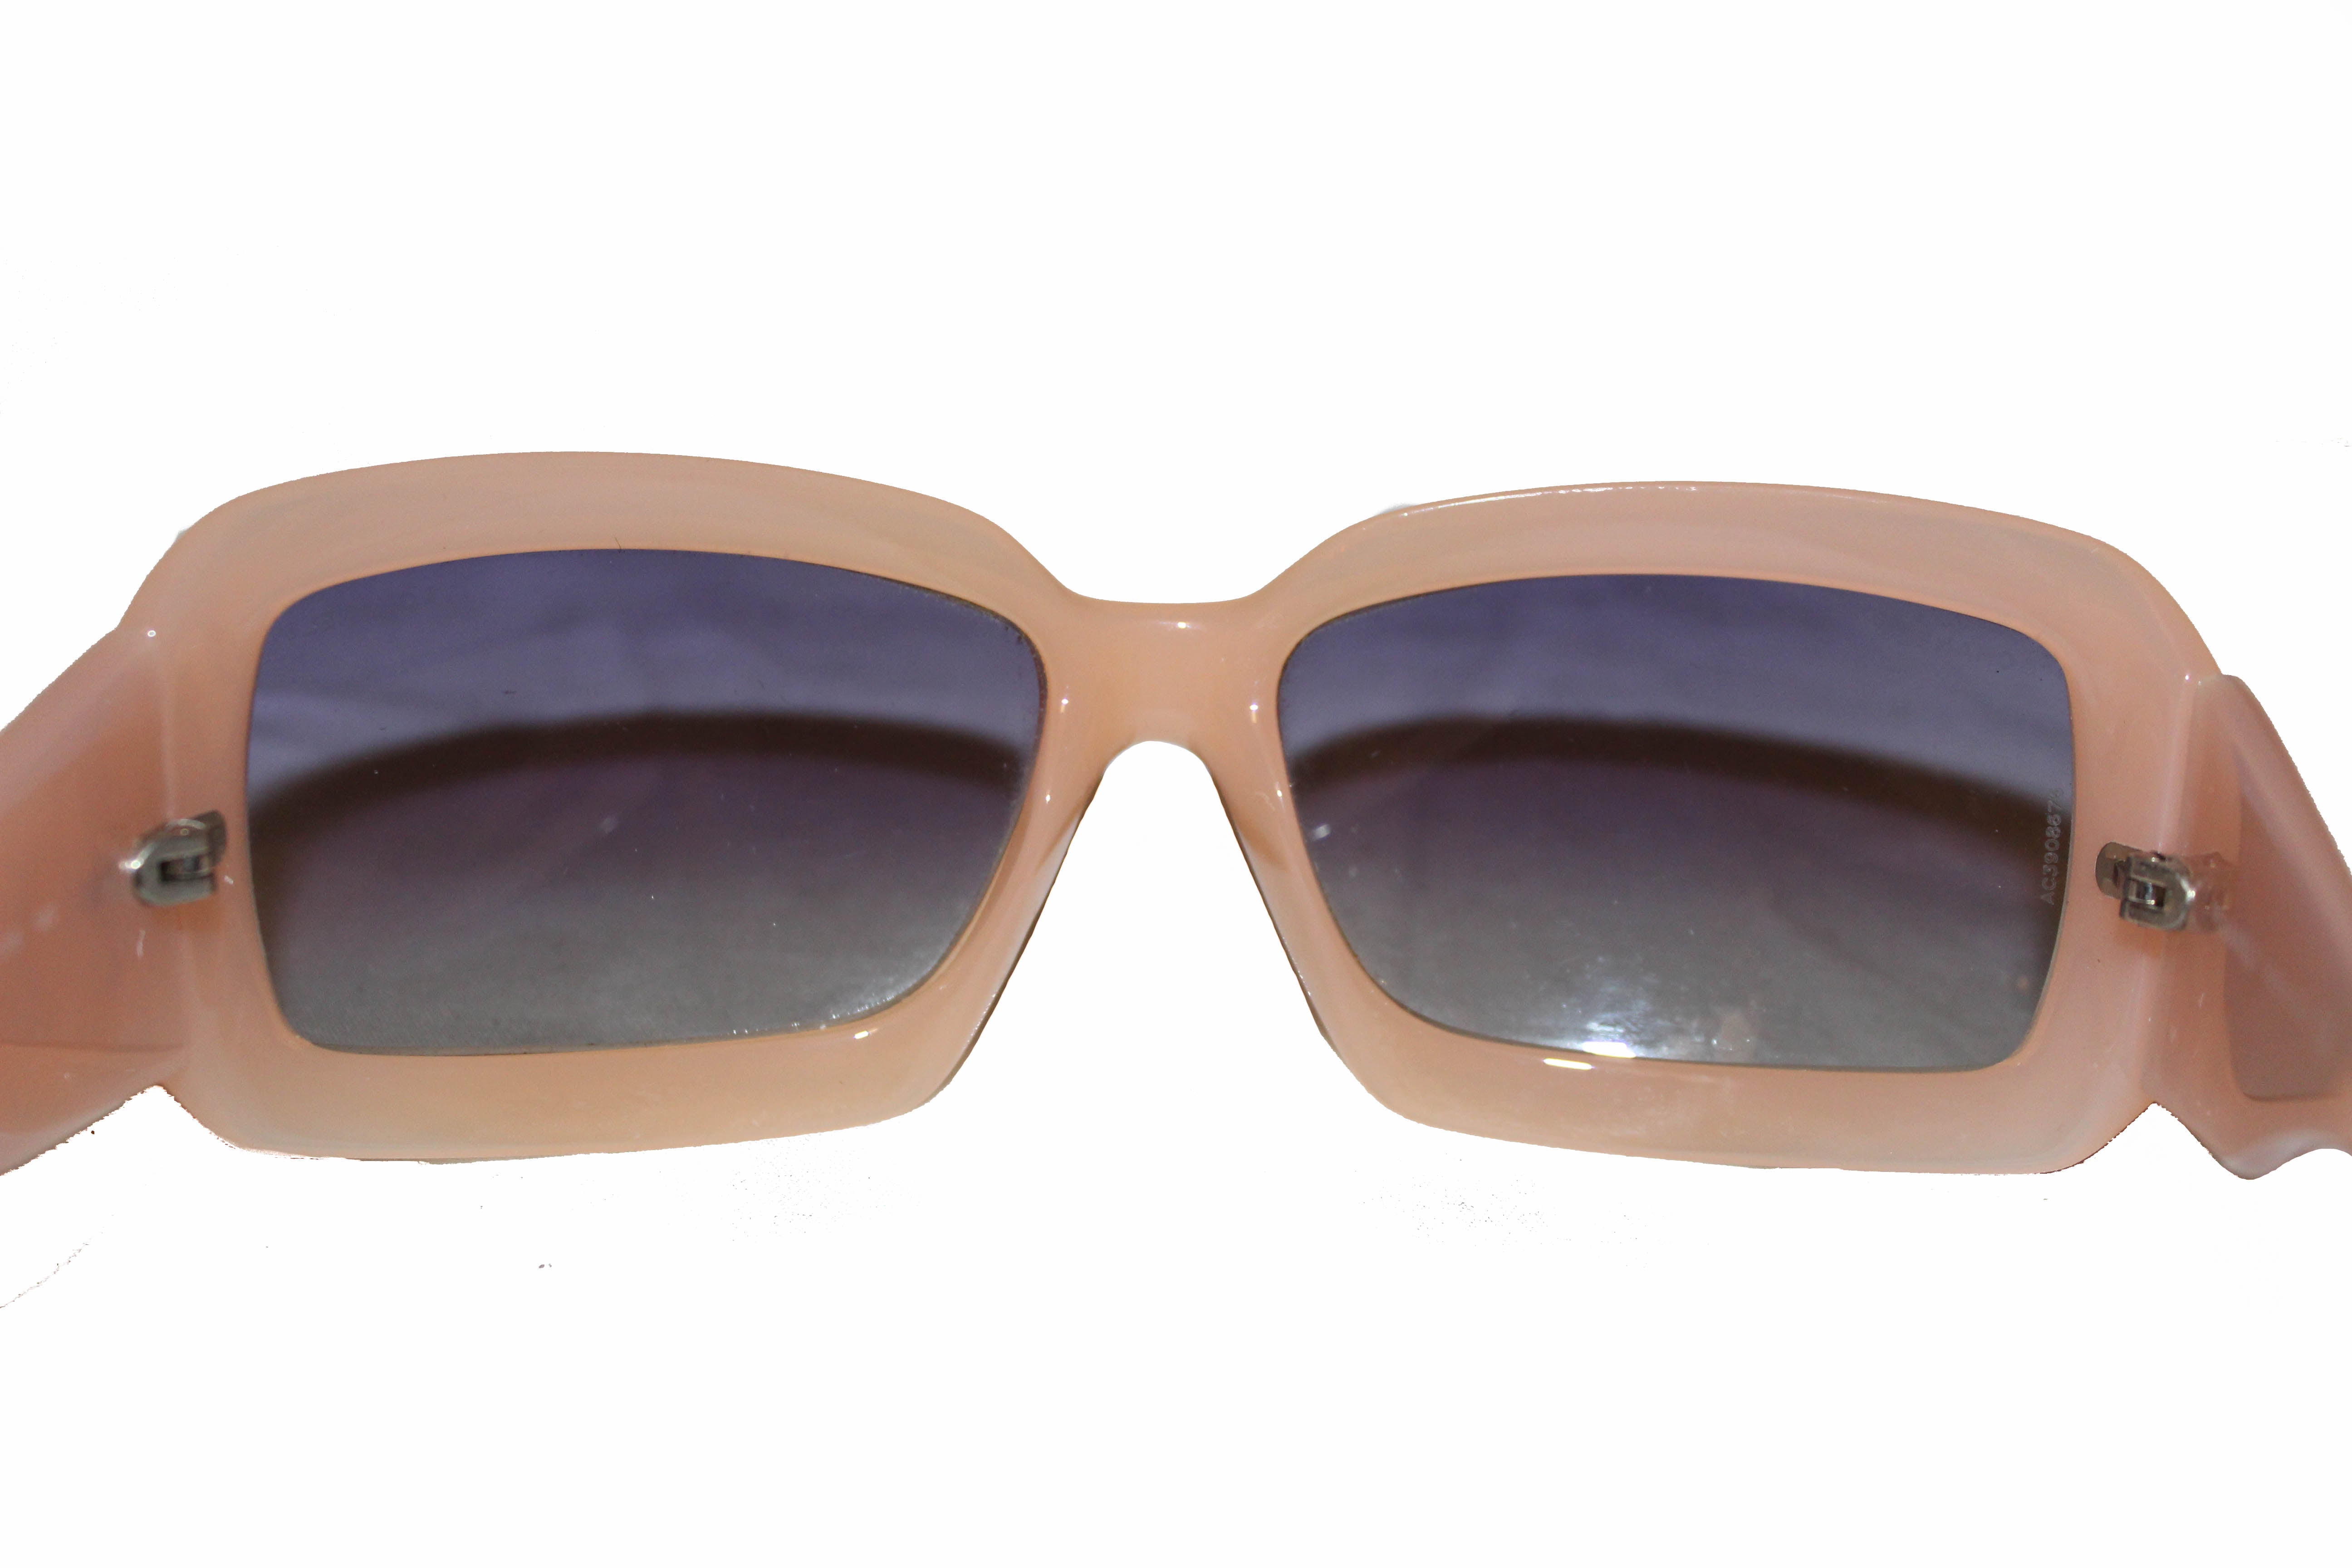 Chanel sunglasses w/case - Gem